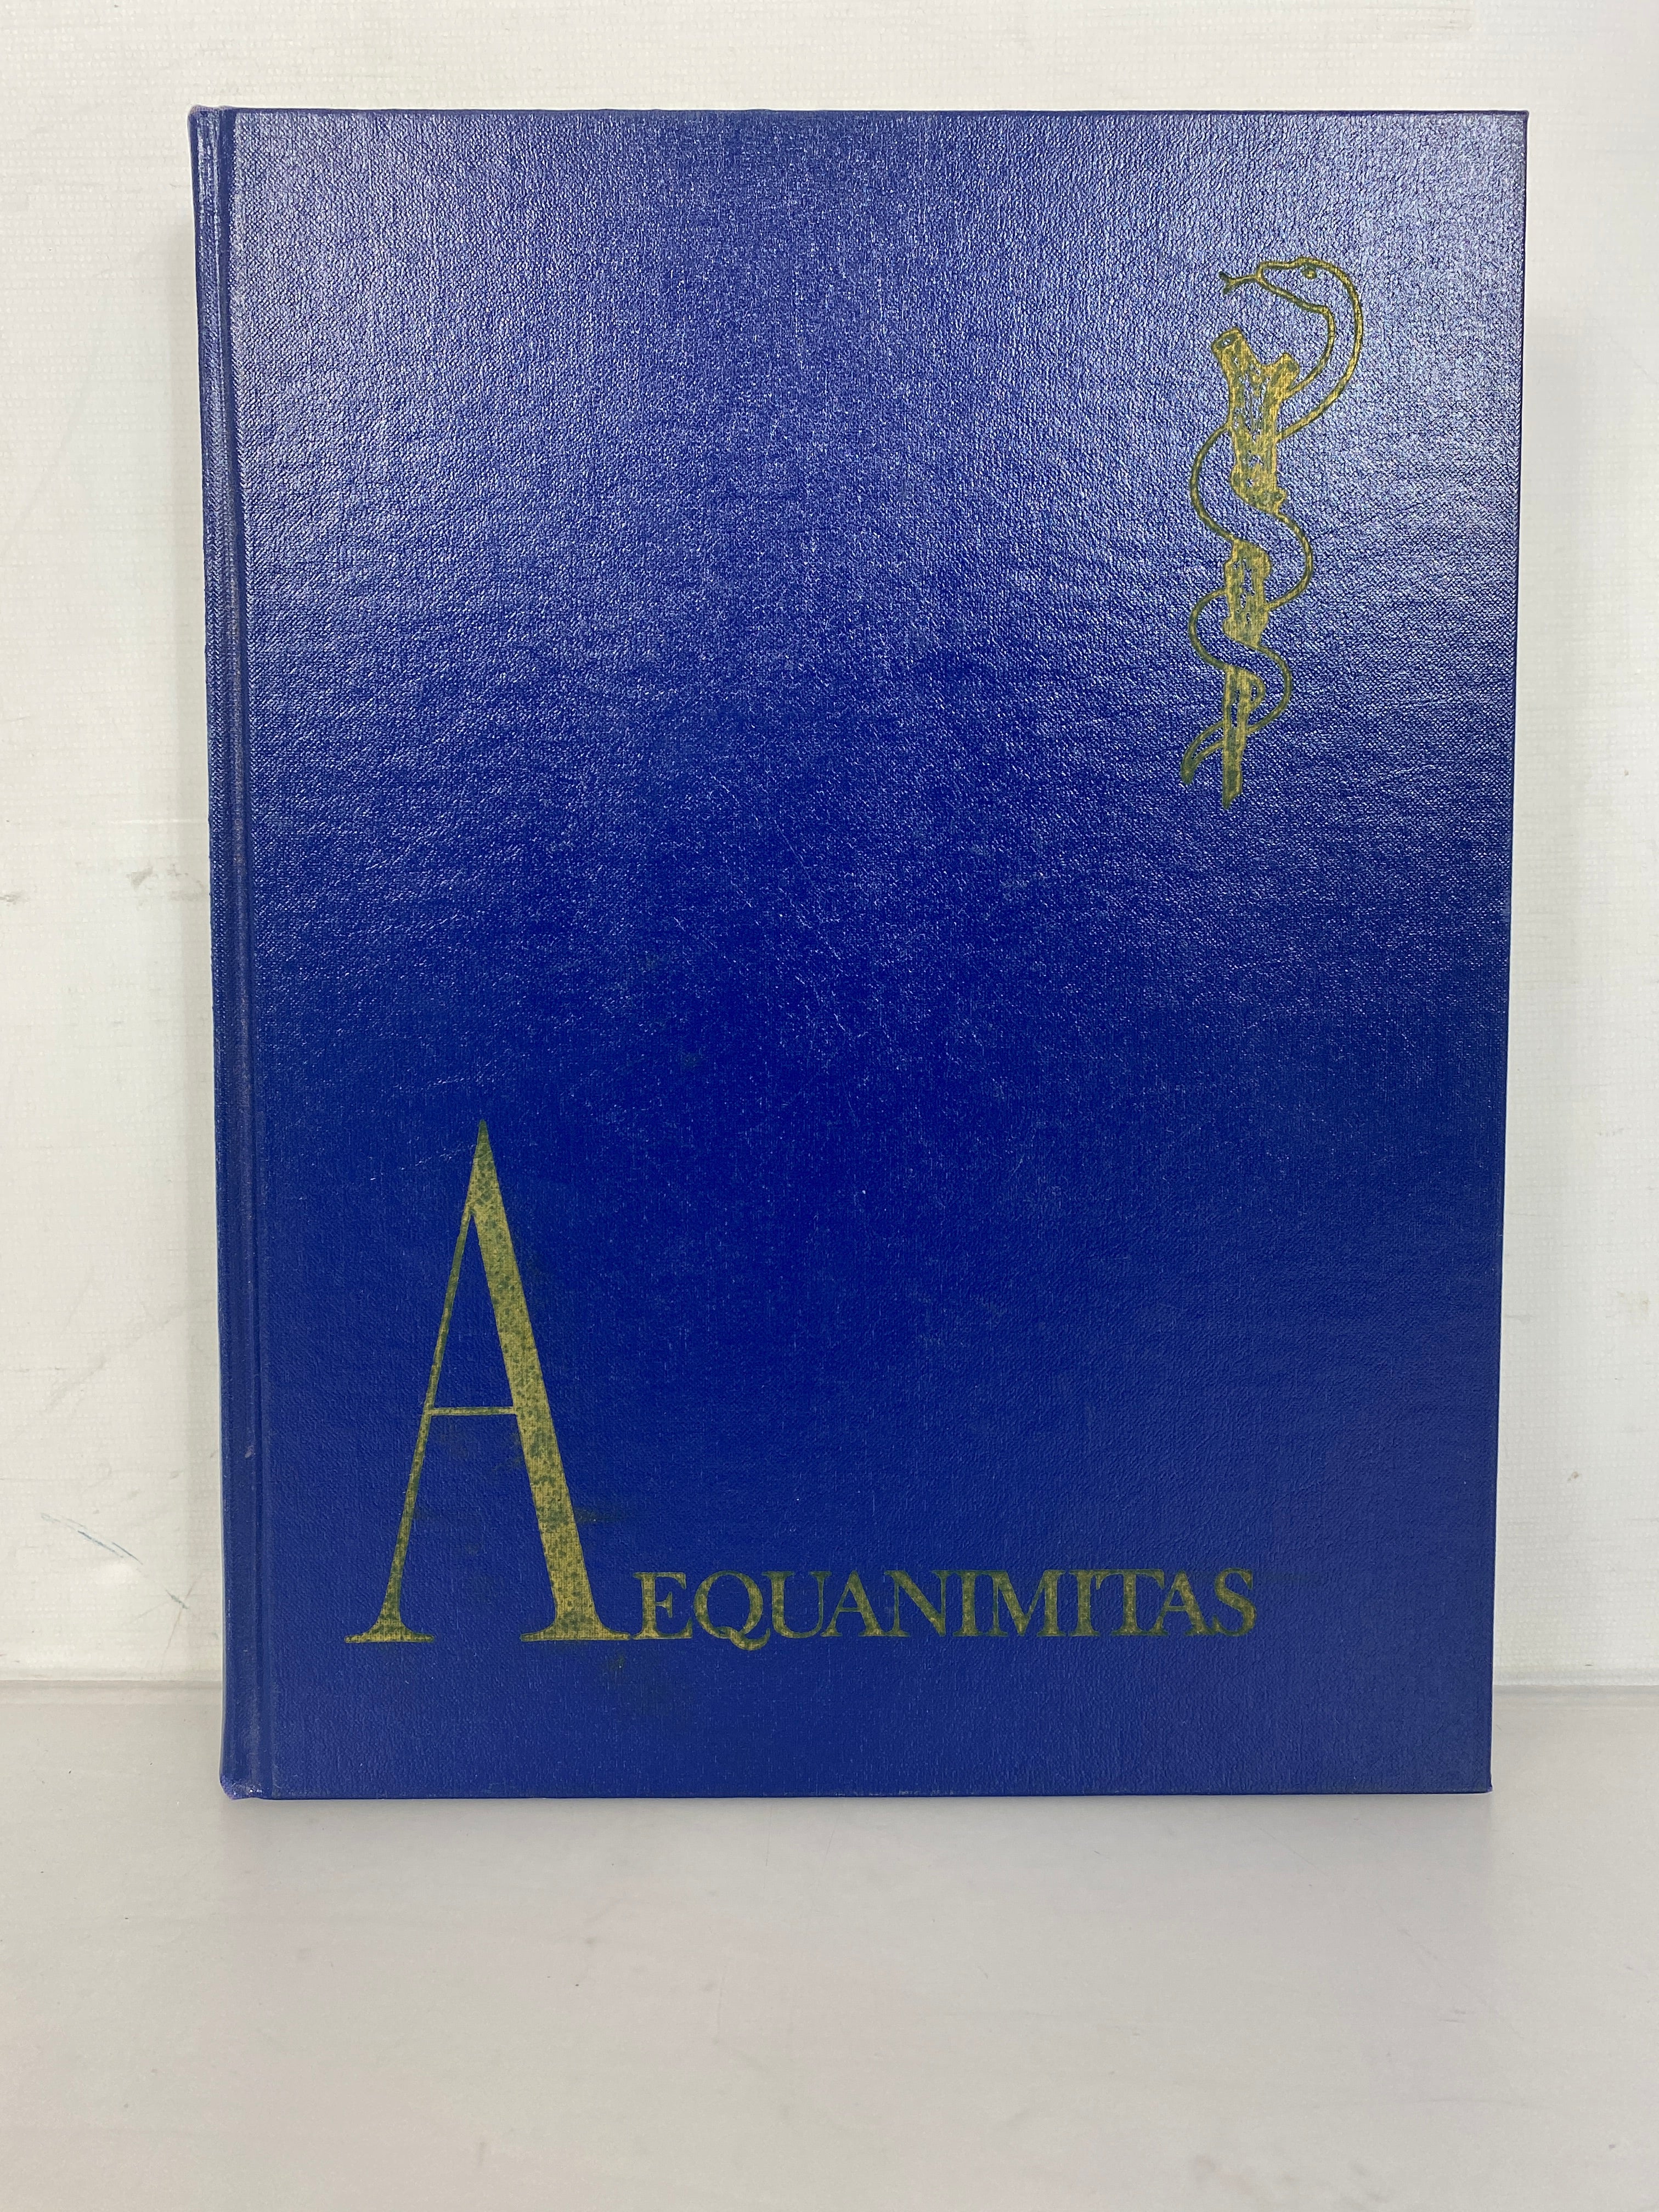 1969 University of Michigan Medical & Nursing School Yearbook "Aequanimitas"